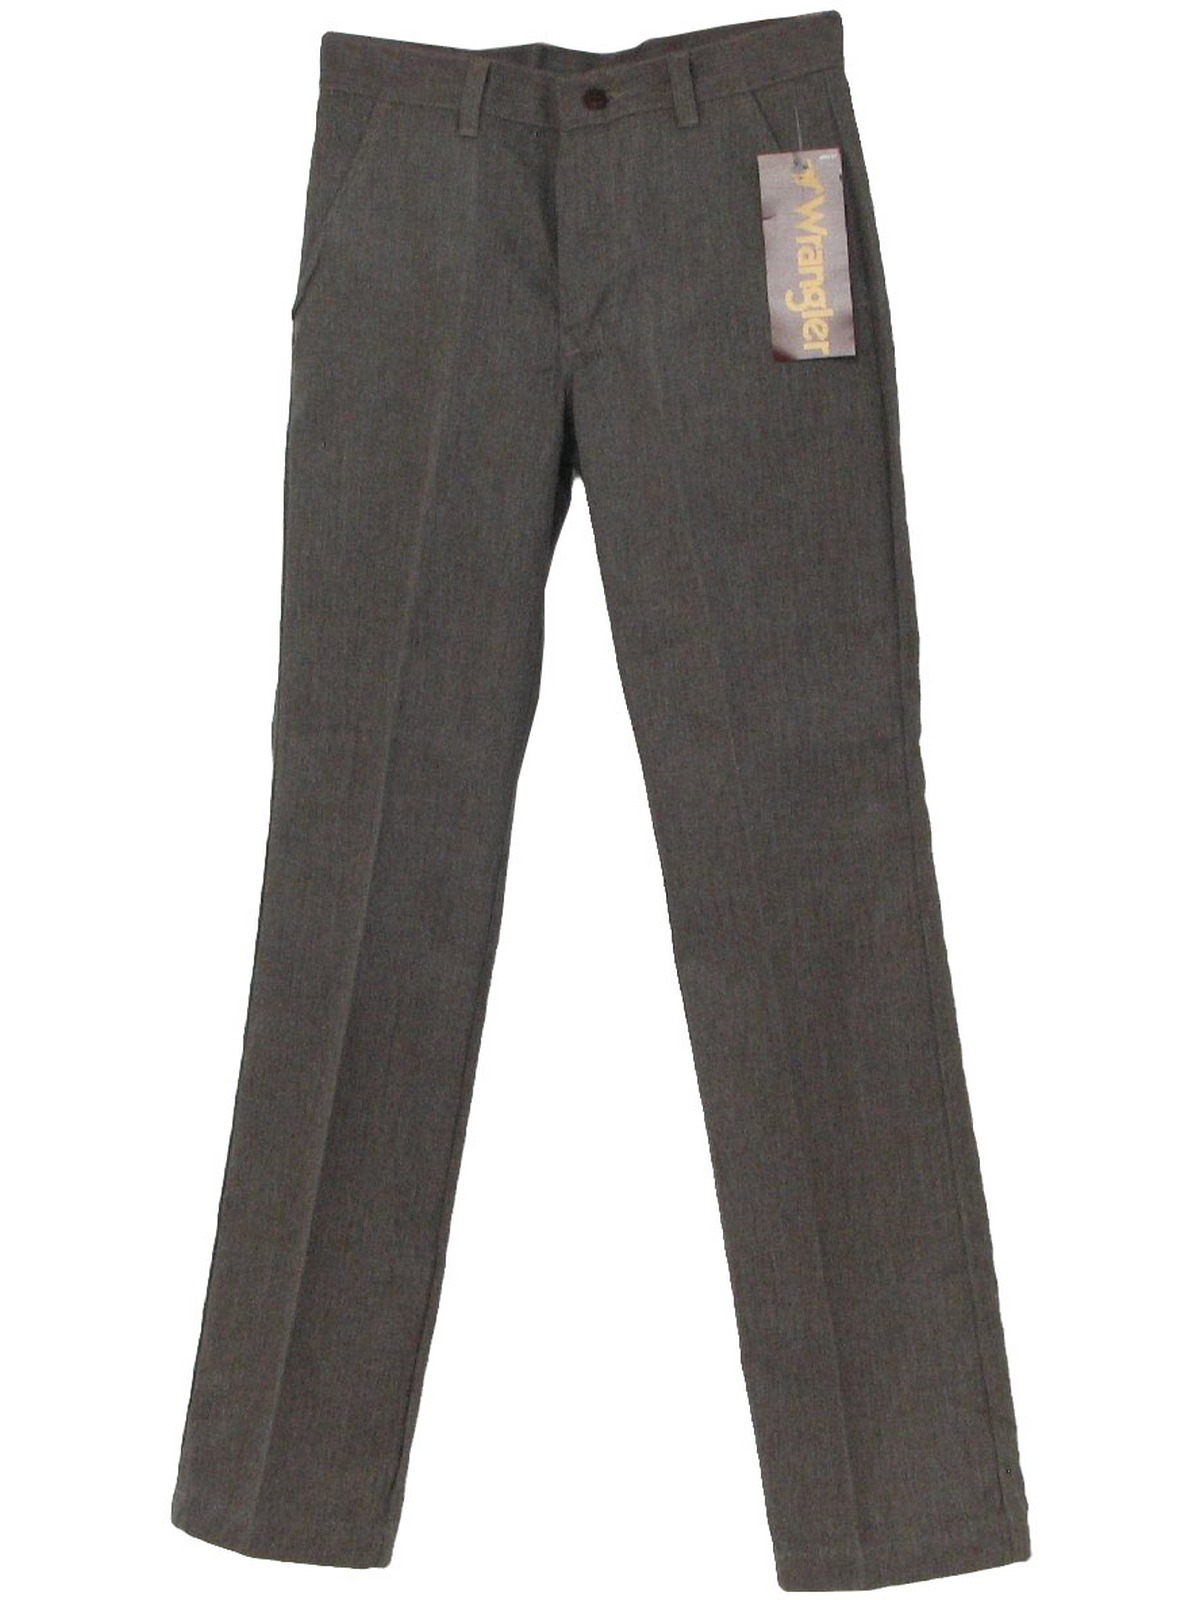 Download Retro 70's Pants: Early 70s -Wrangler Fashion Pant- Mens ...